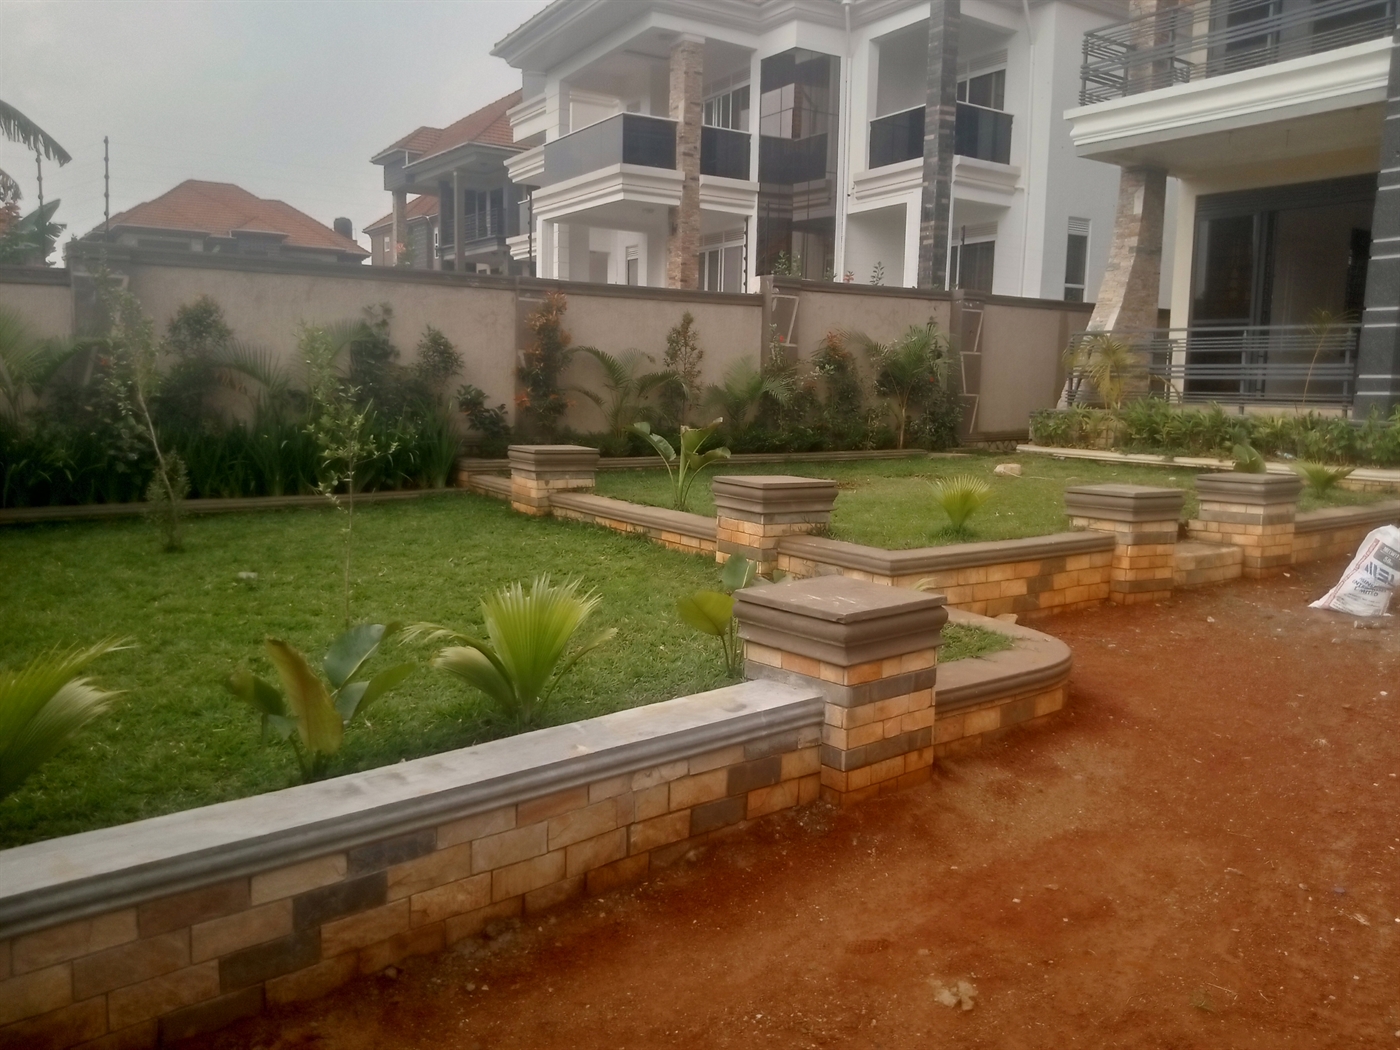 Duplex for sale in Kulambilo Kampala